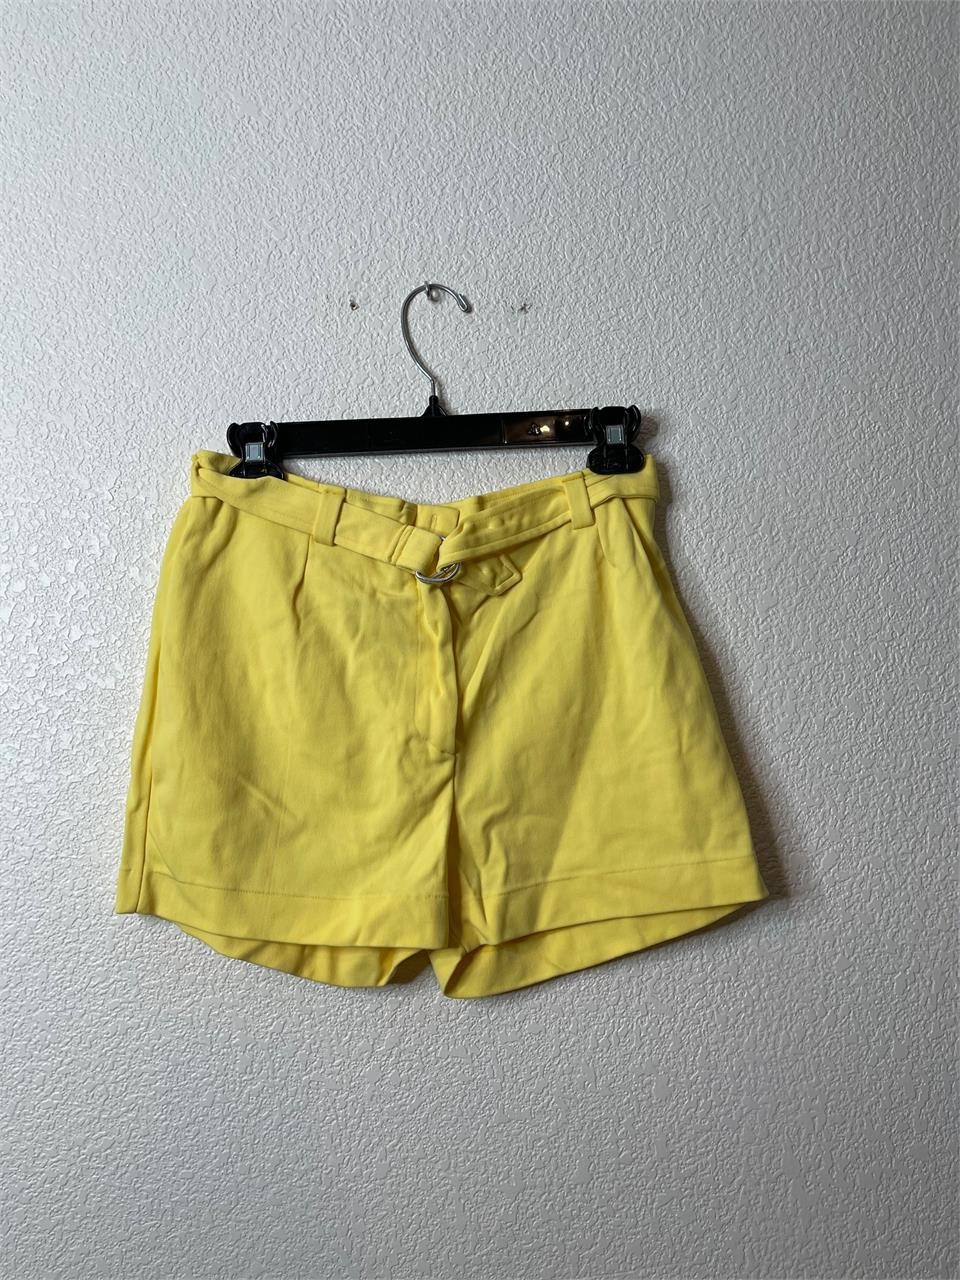 Vintage 70s/80s Yellow Nylon Shorts